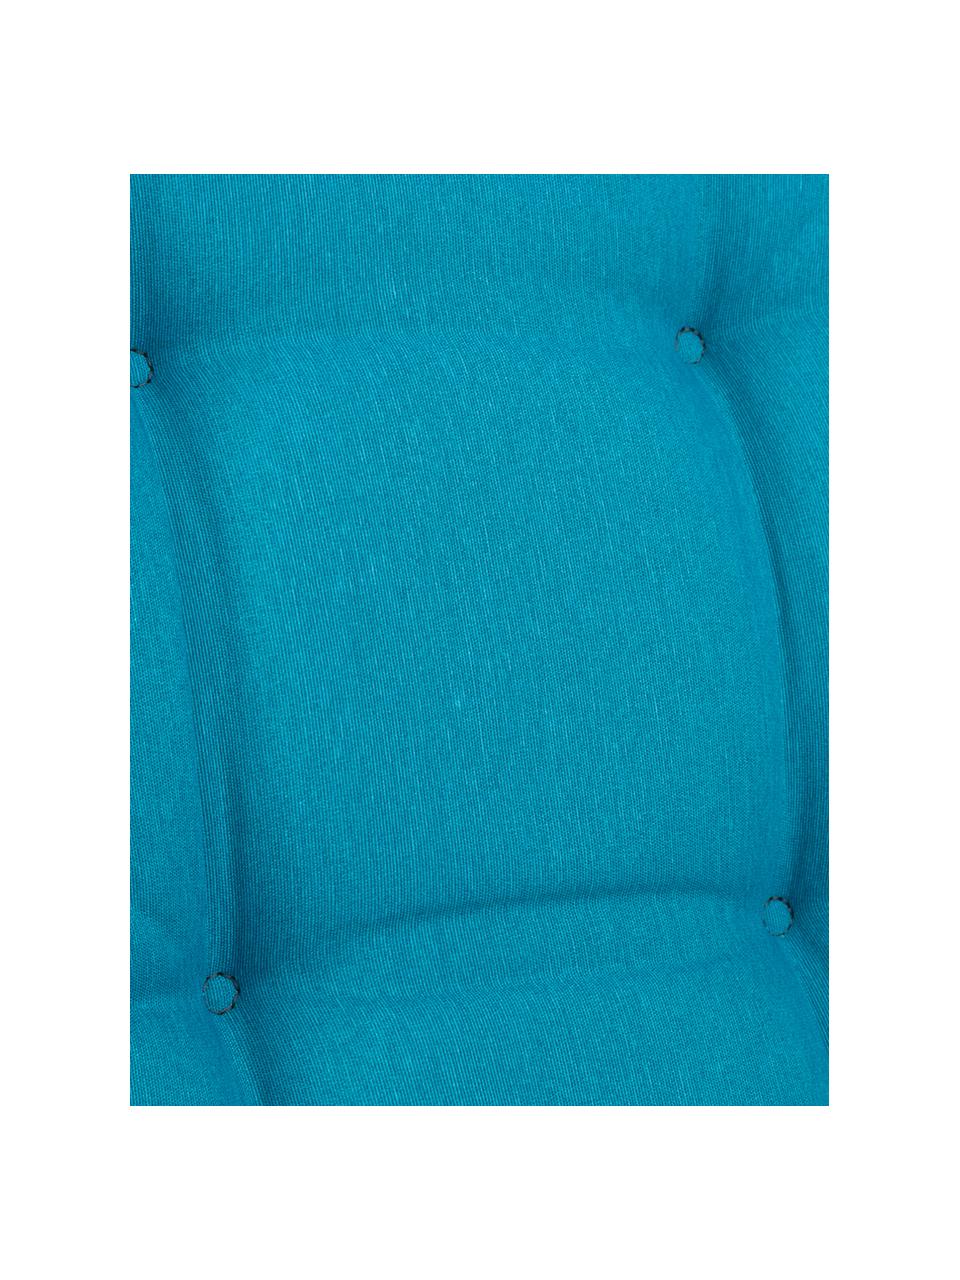 Einfarbige Hochlehner-Stuhlauflage Panama in Türkis, Bezug: 50% Baumwolle, 50% Polyes, Türkisblau, 50 x 123 cm